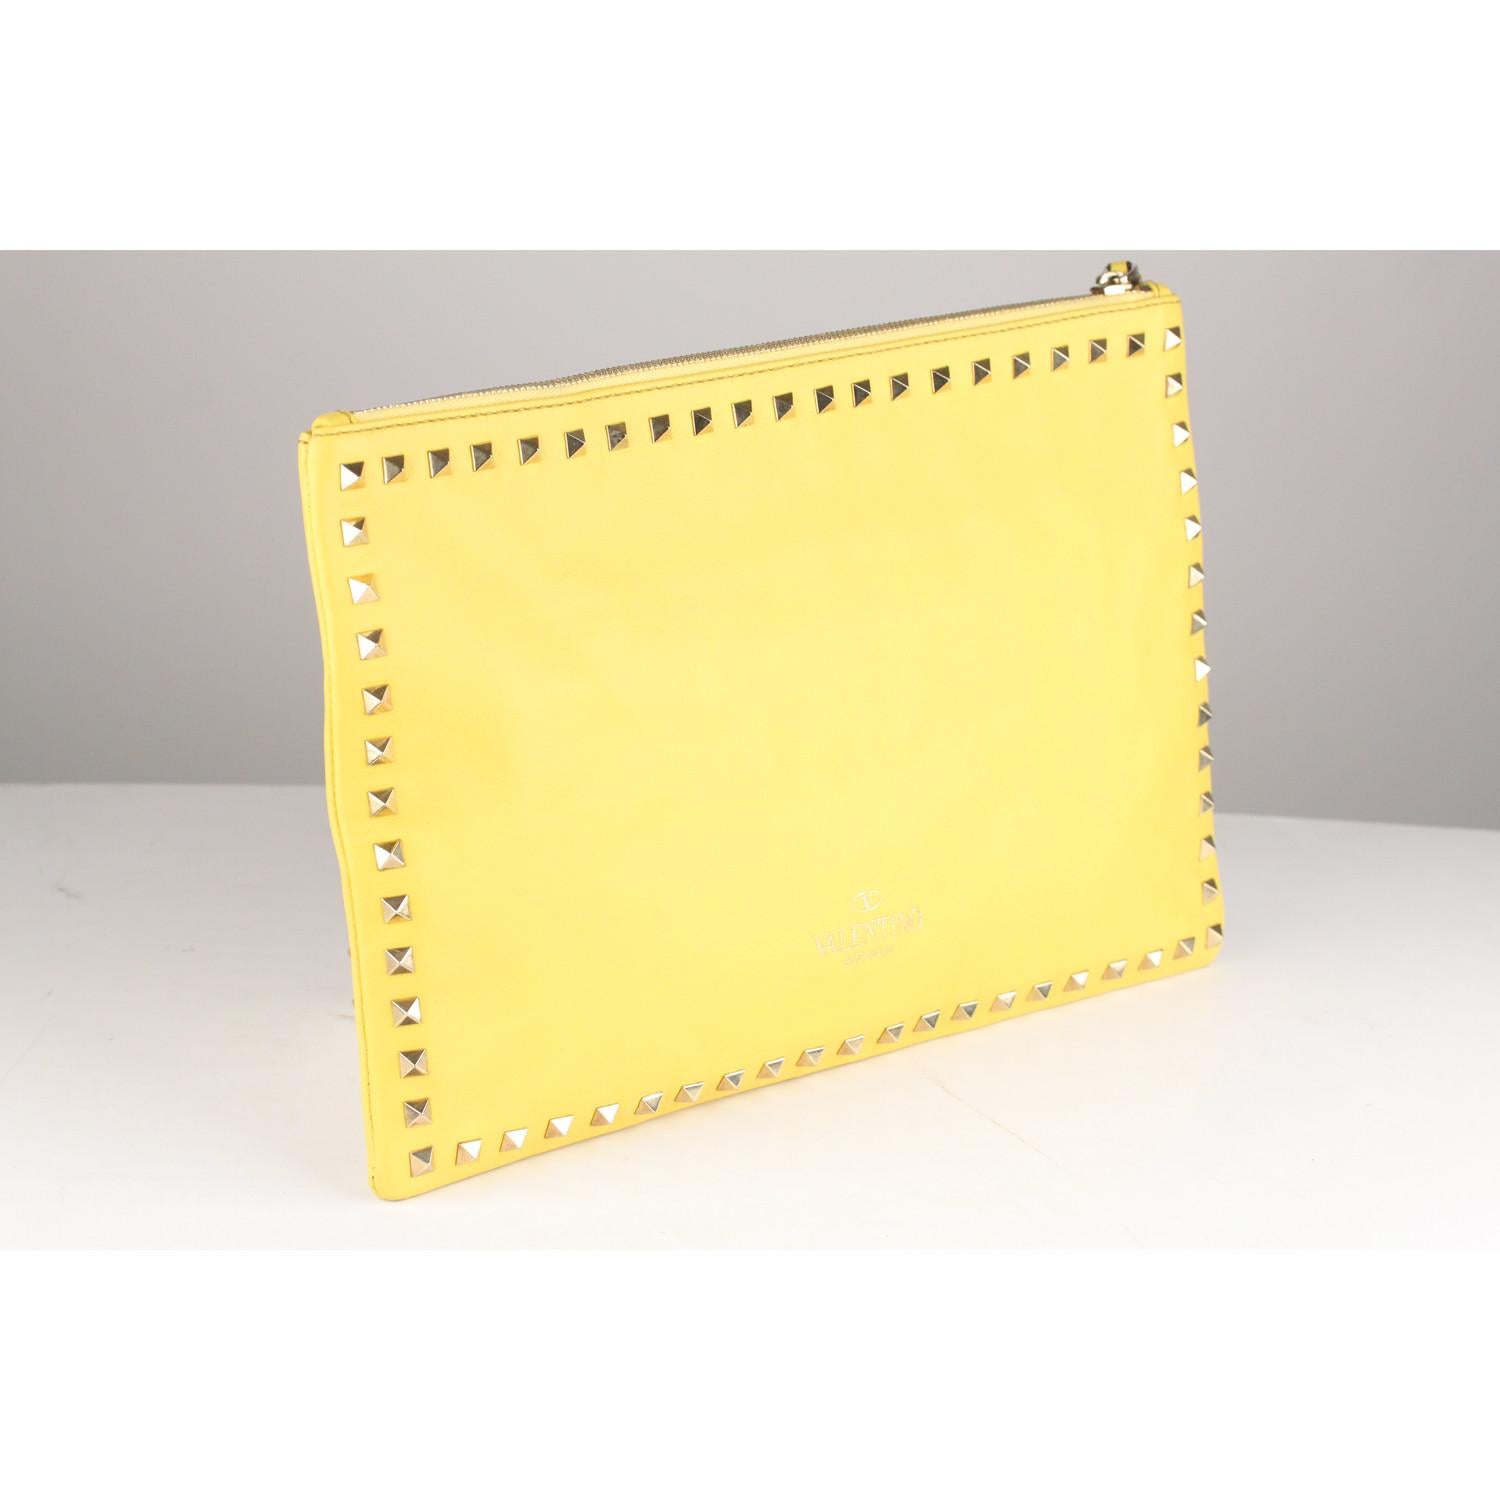 Valentino Yellow Leather Studded Rockstud Large Clutch Wrist Bag 5